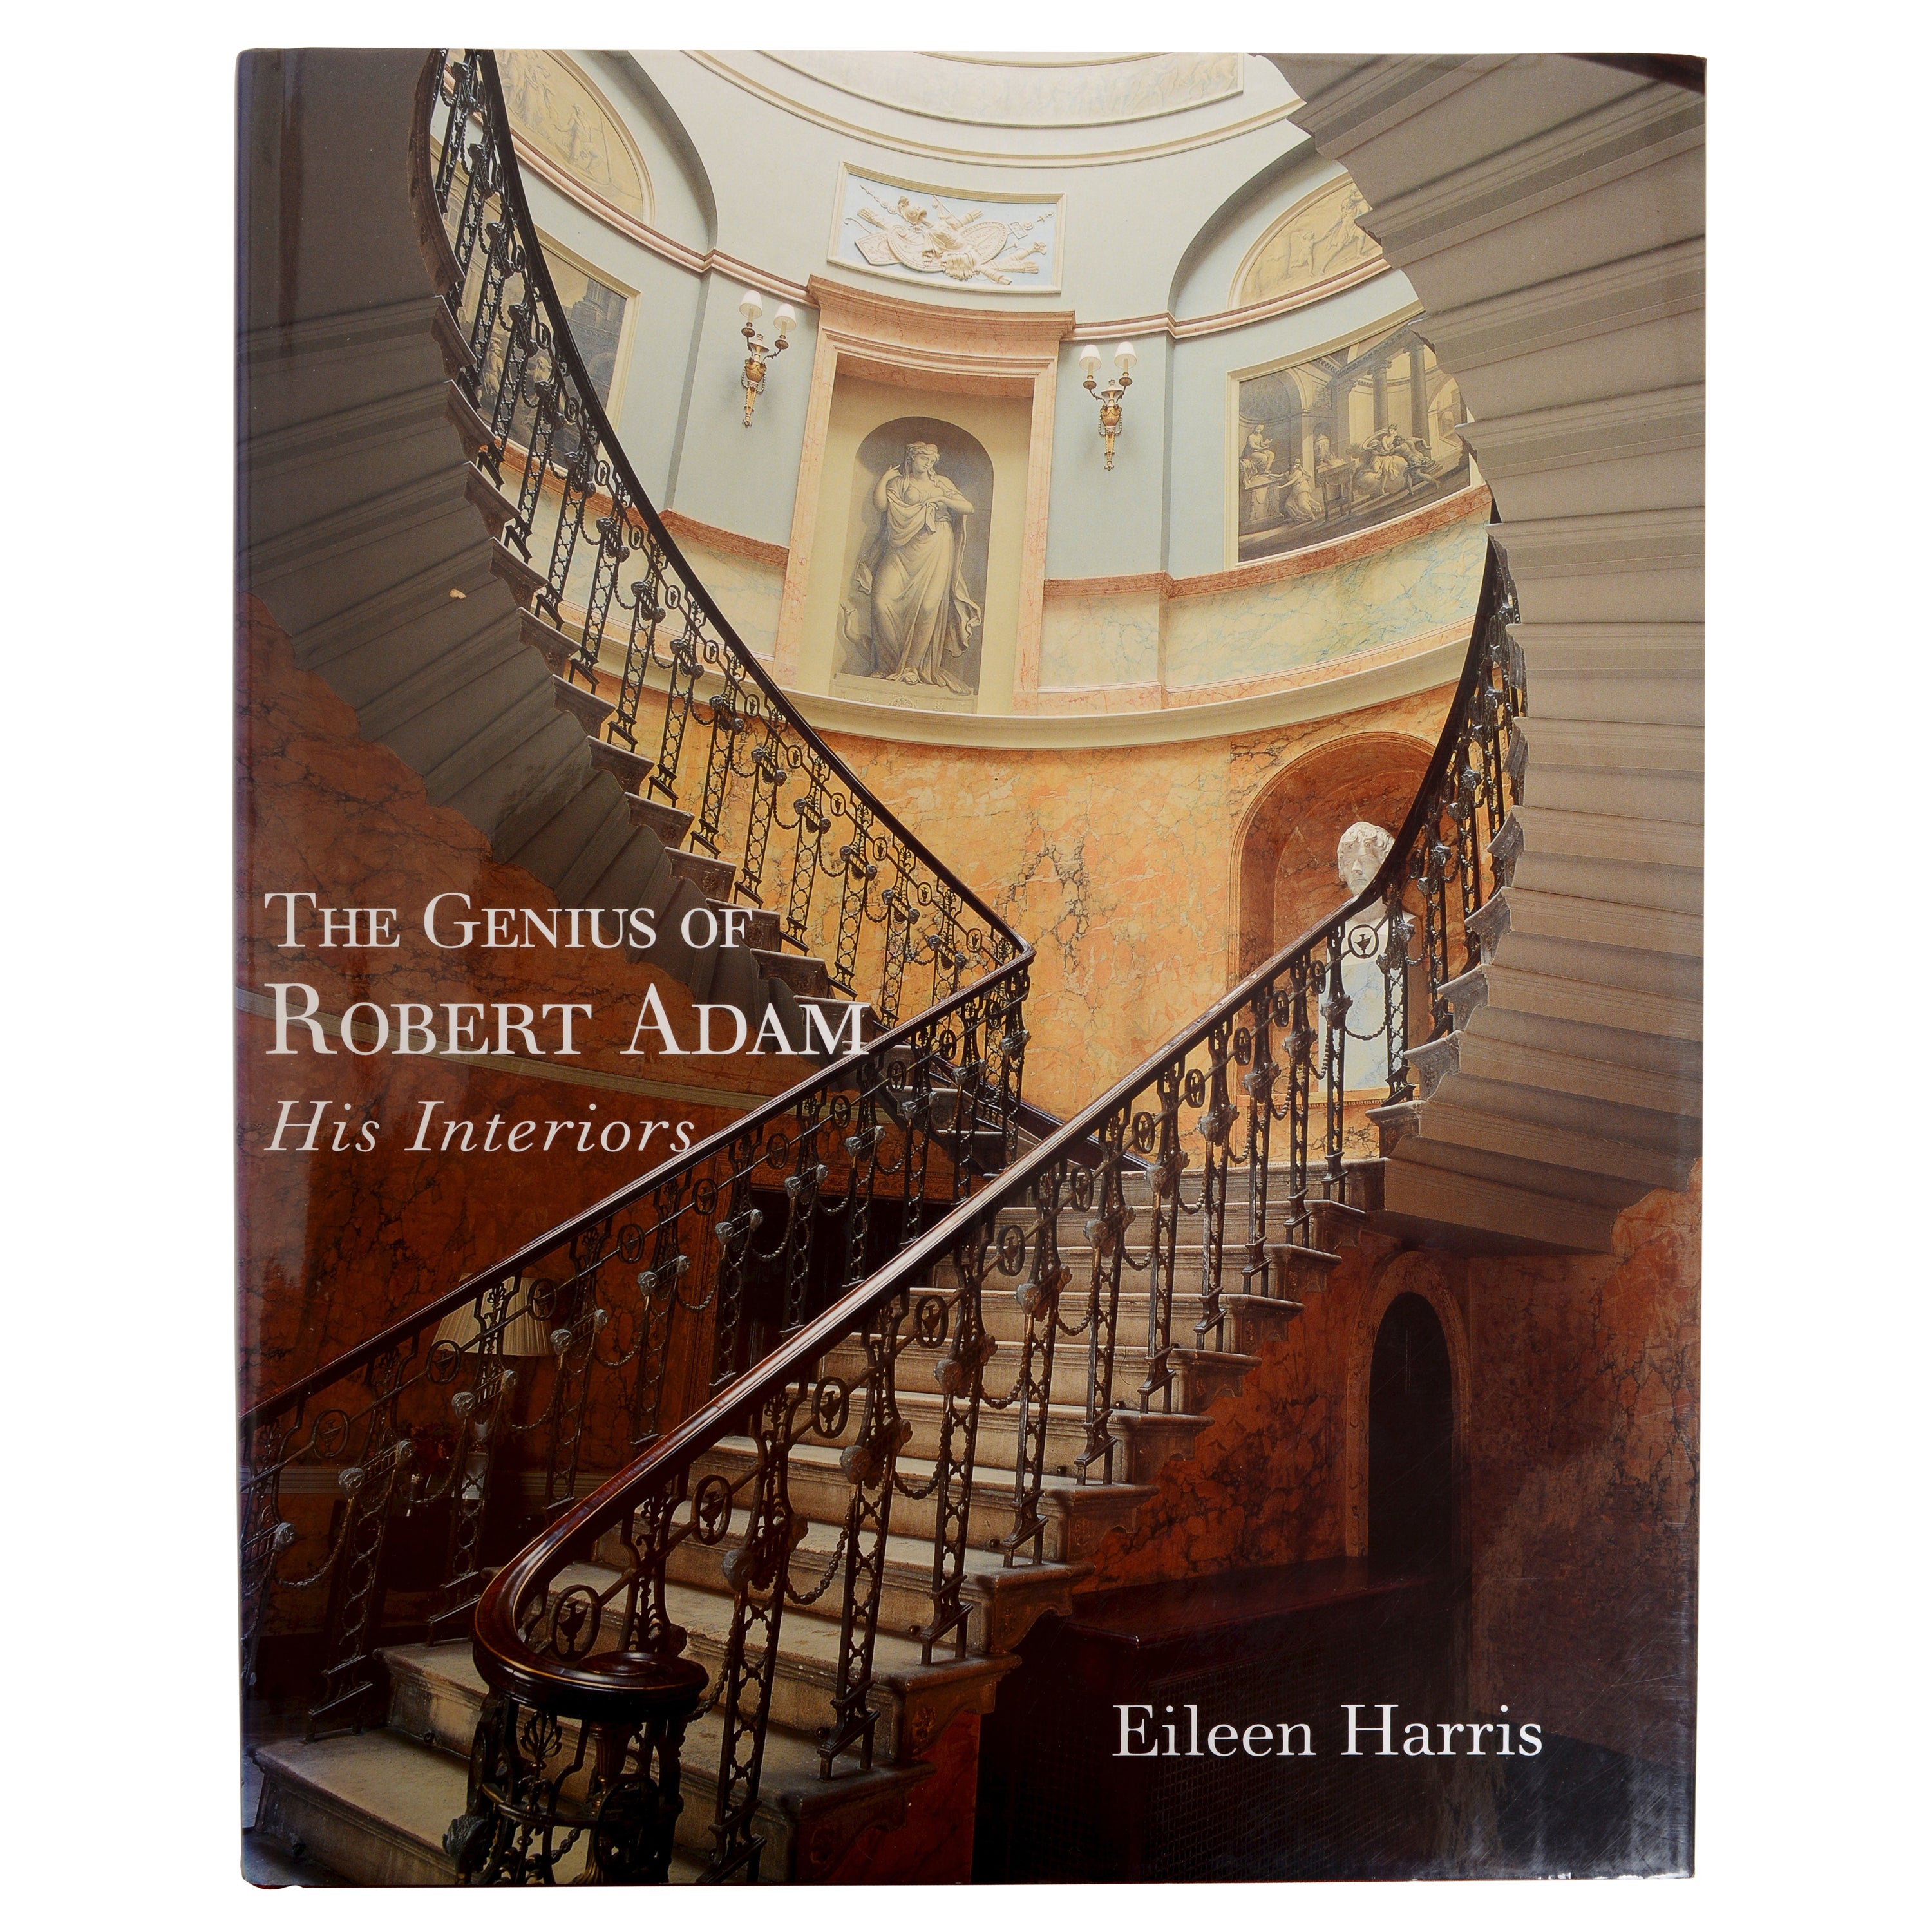 The Genius of Robert Adam: His Interiors by Eileen Harris, 1st Ed For Sale